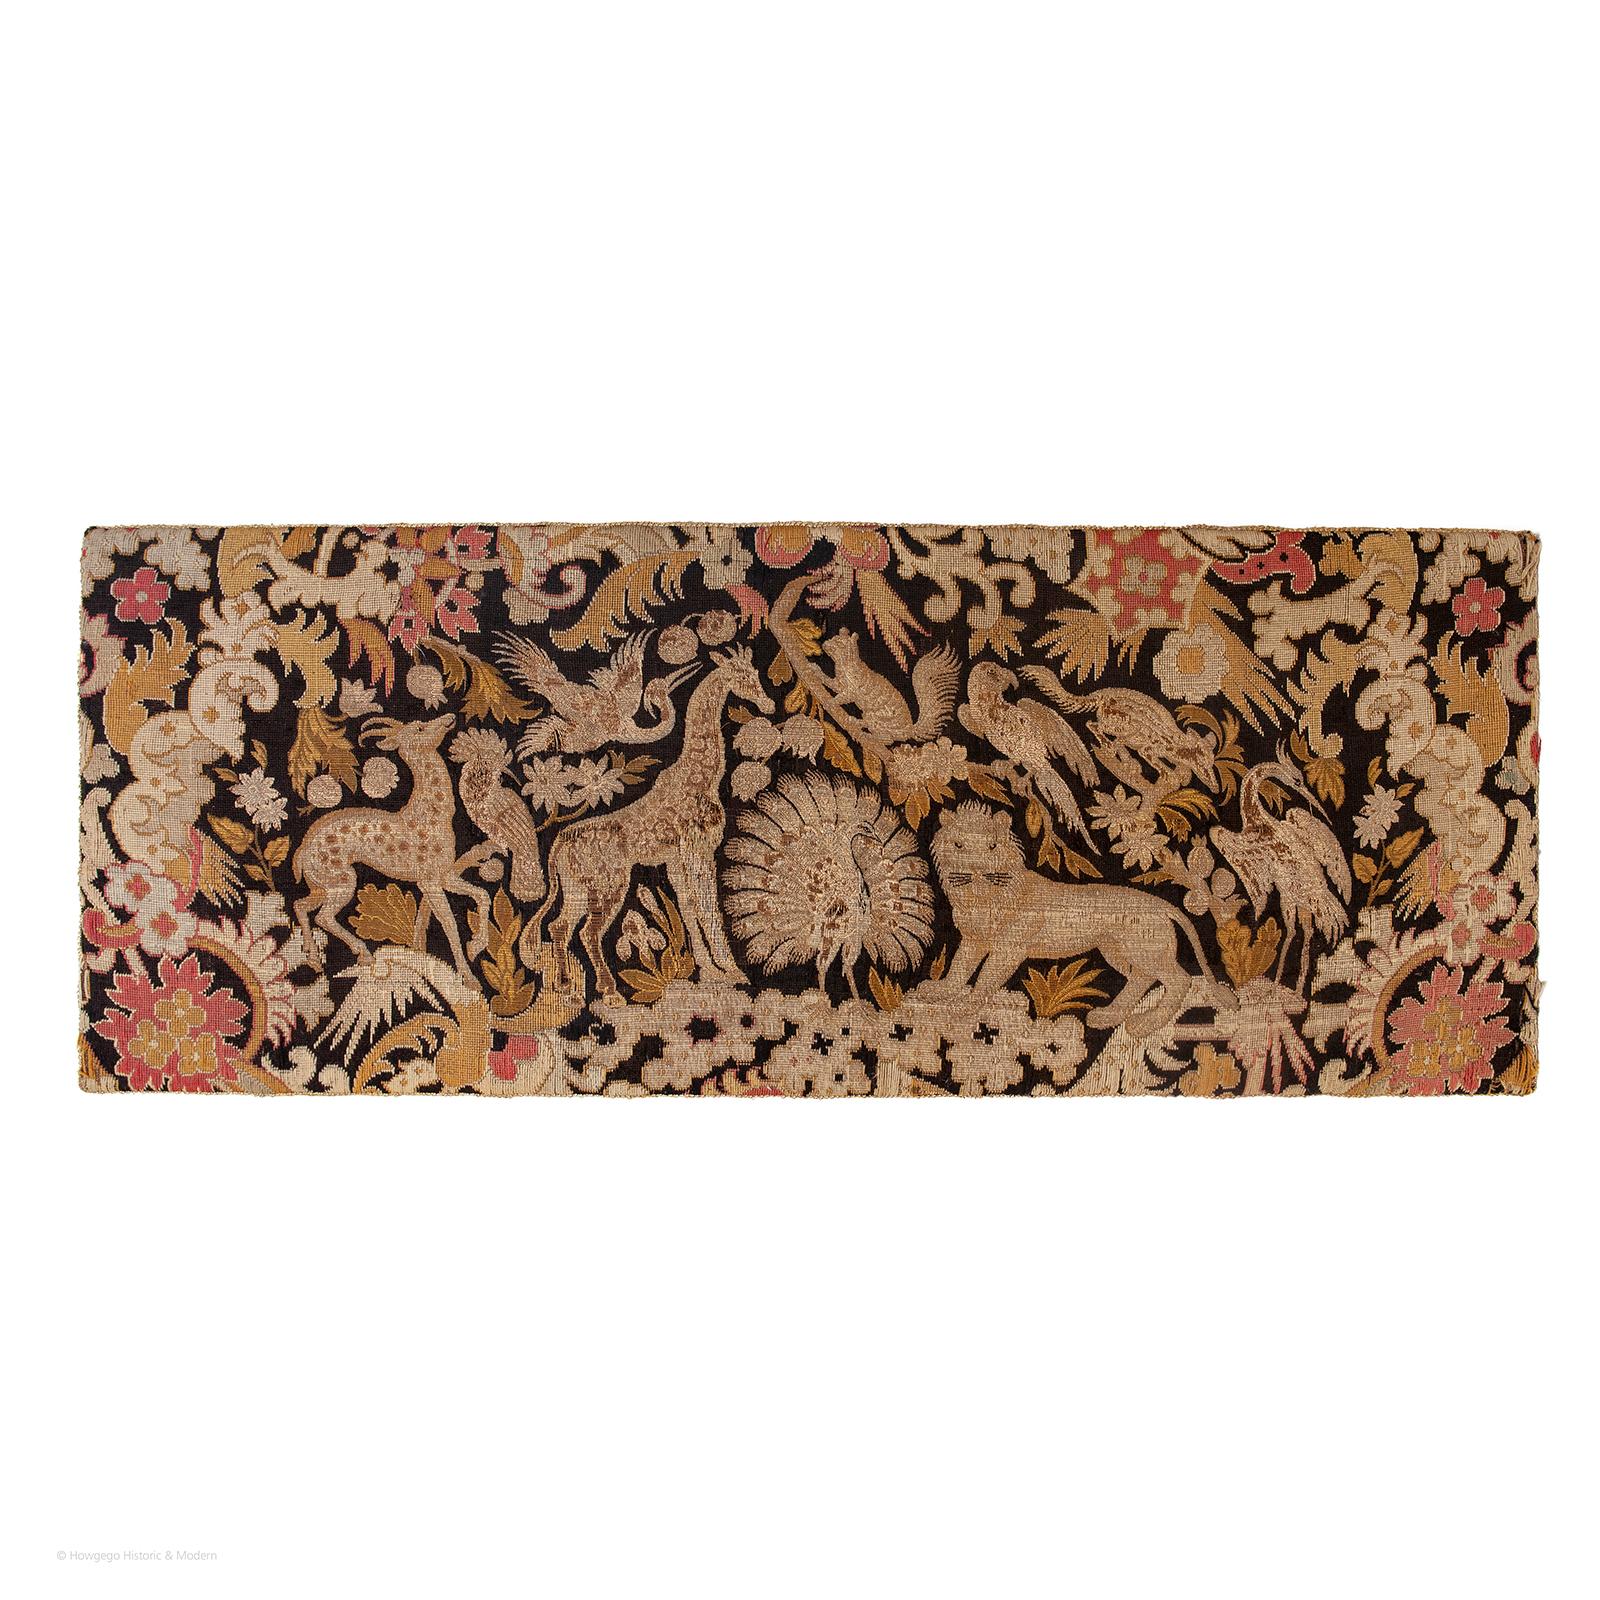 Tapestry Peacock, Girafe, Lion, Deer, Exotic Birds Floral Folk Naive For Sale